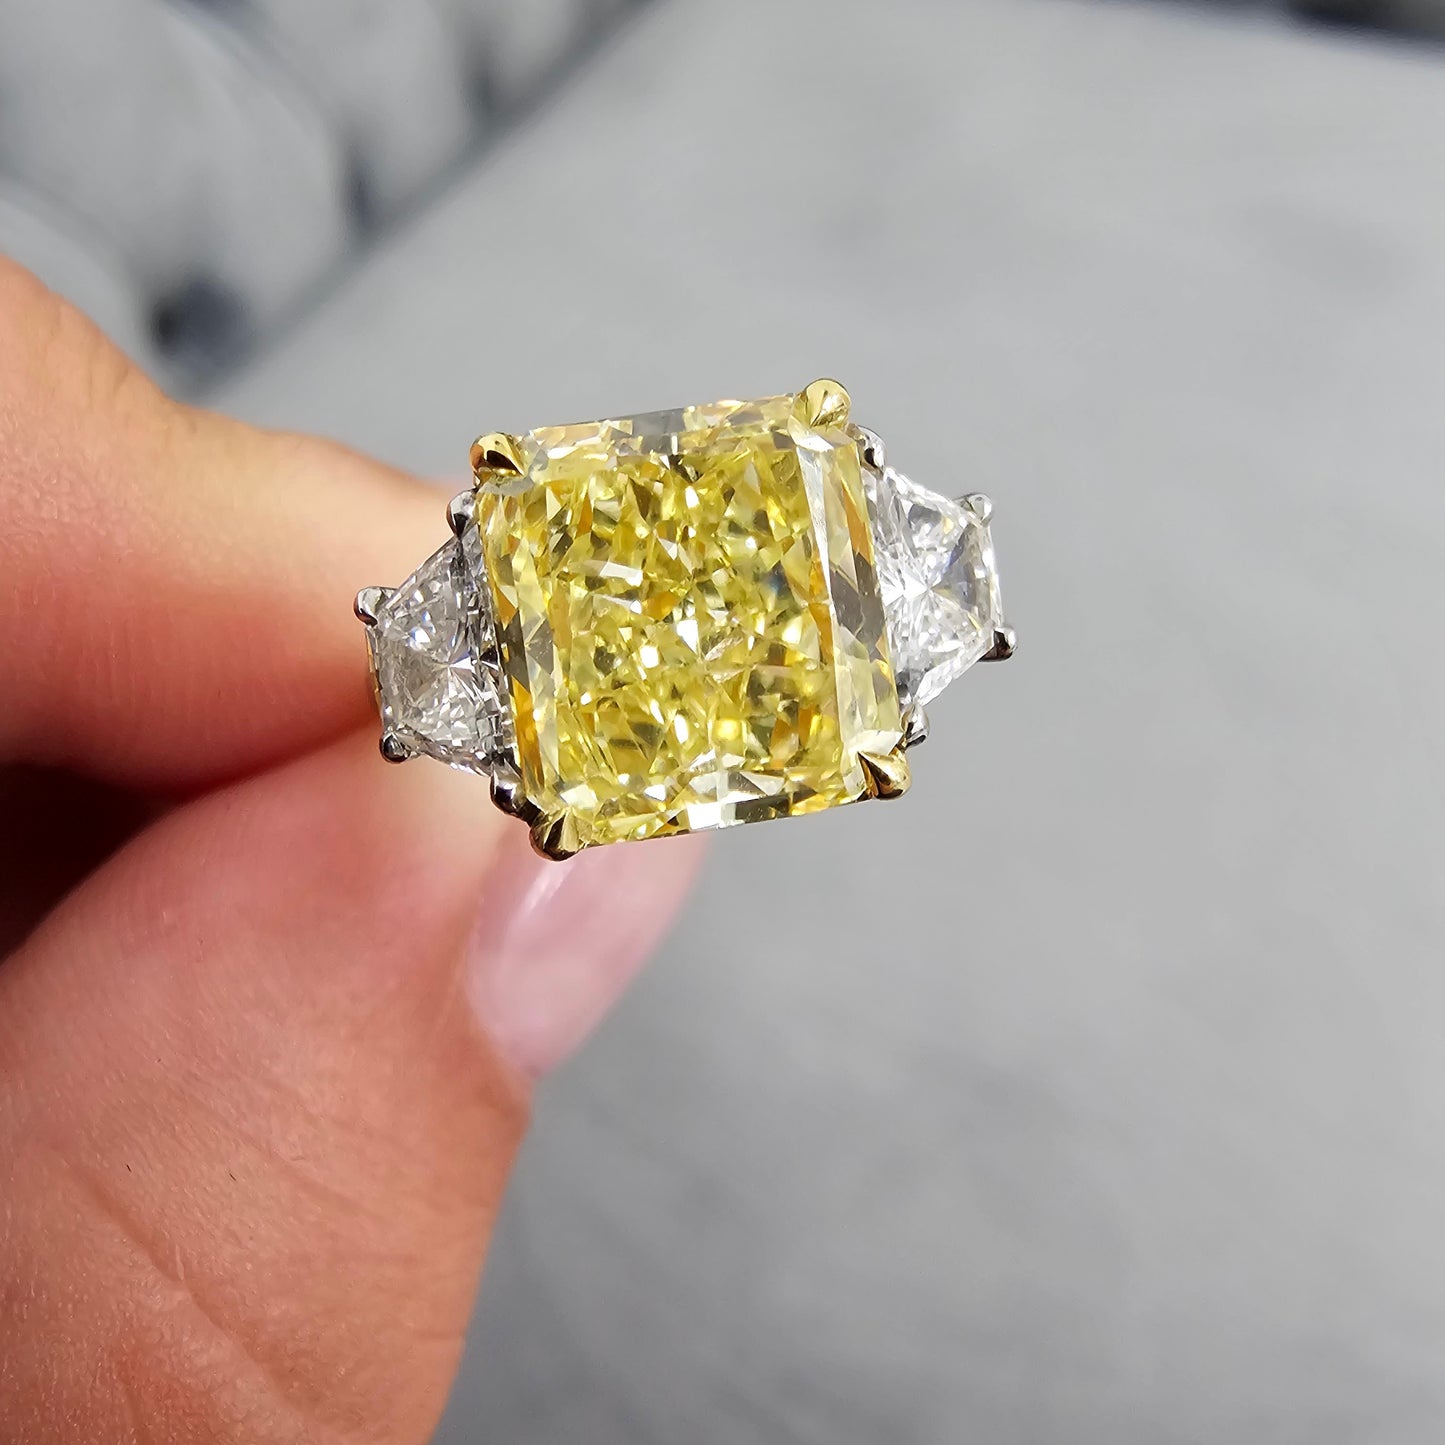 3 carat fancy yellow diamond ring. Yellow radiant cut diamond ring. Yellow engagement ring. Yellow diamond ring. Yellow diamond jewelry. Gia certified